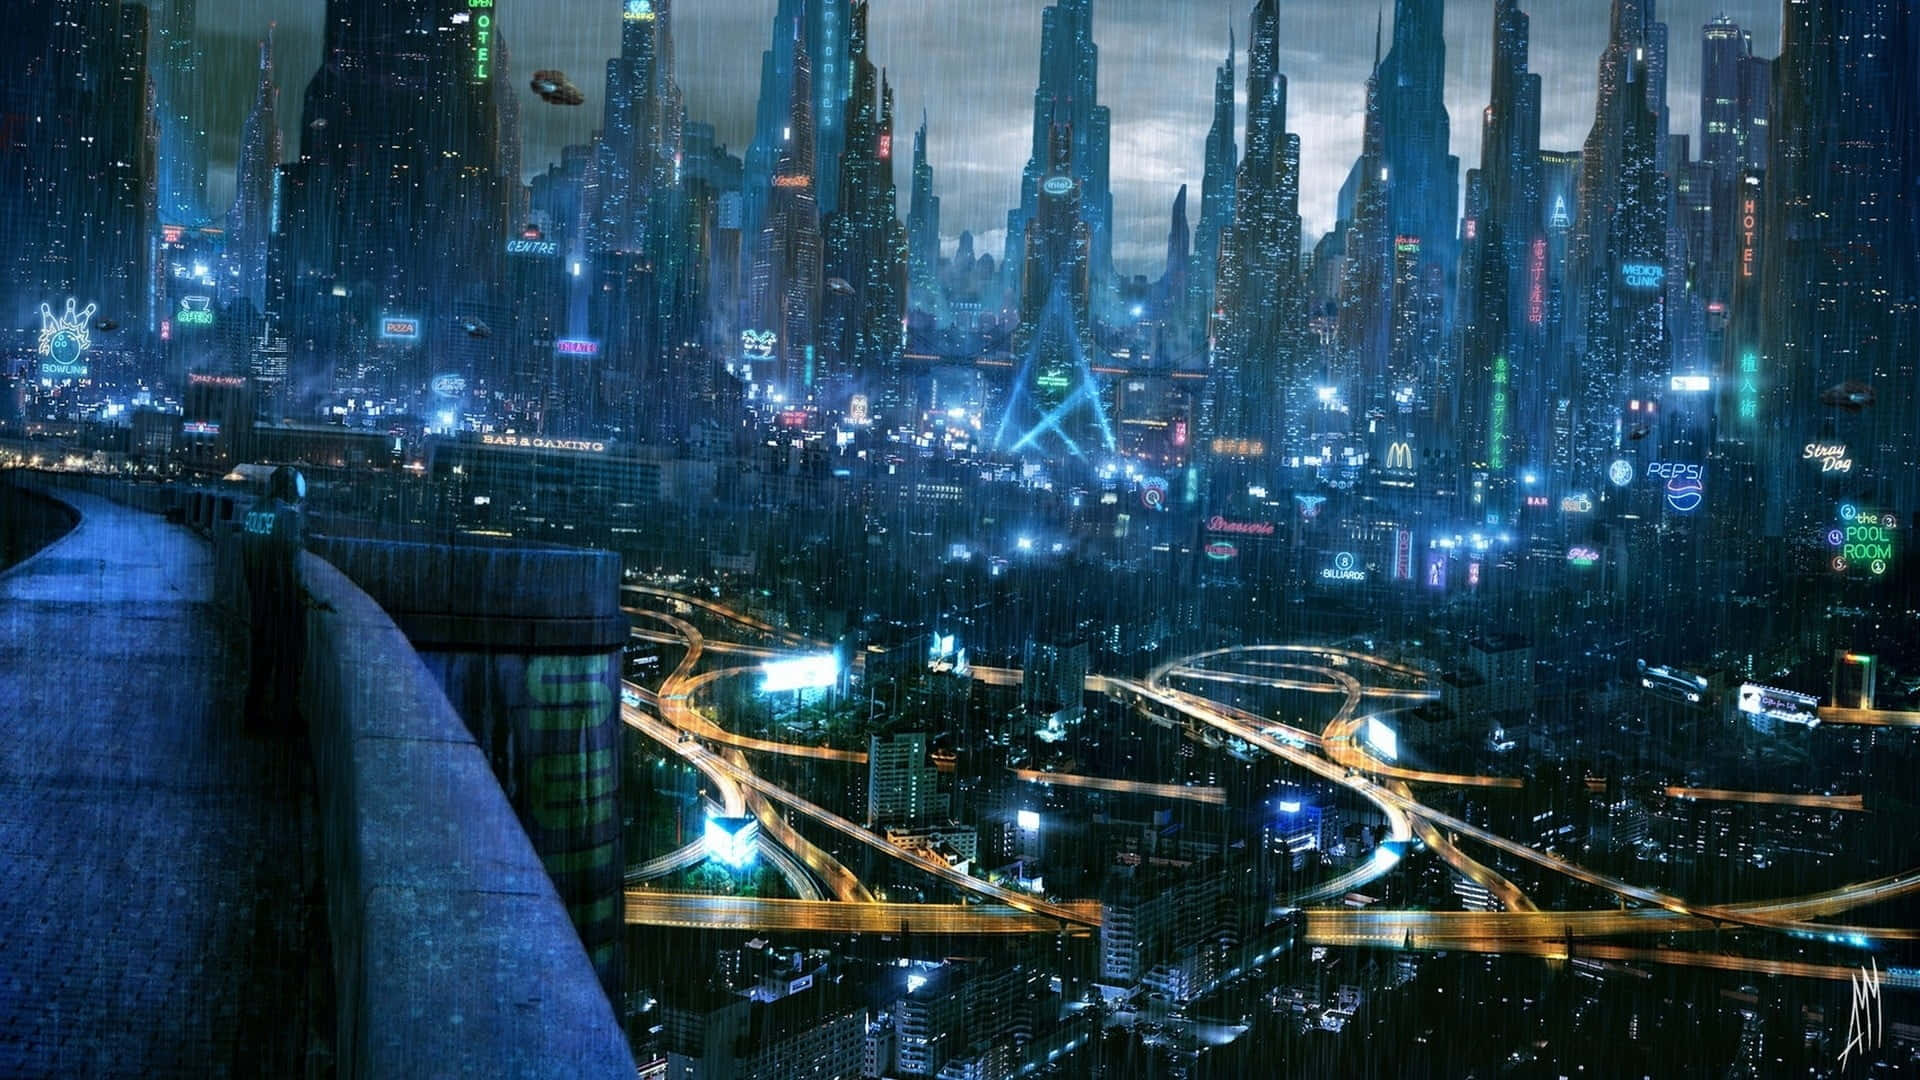 Explore the vibrant city of Cyberpunk